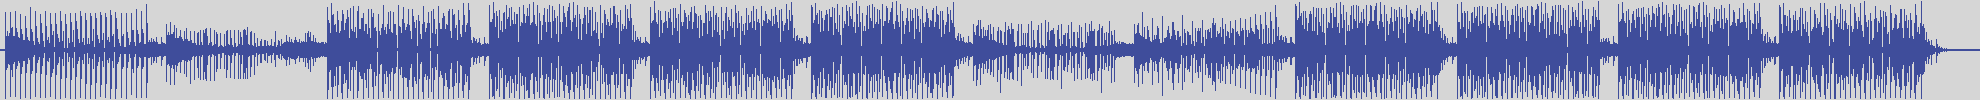 nf_boyz_records [NFY062] Konya Lin - Imperial Melody [Mikonos Mix] audio wave form